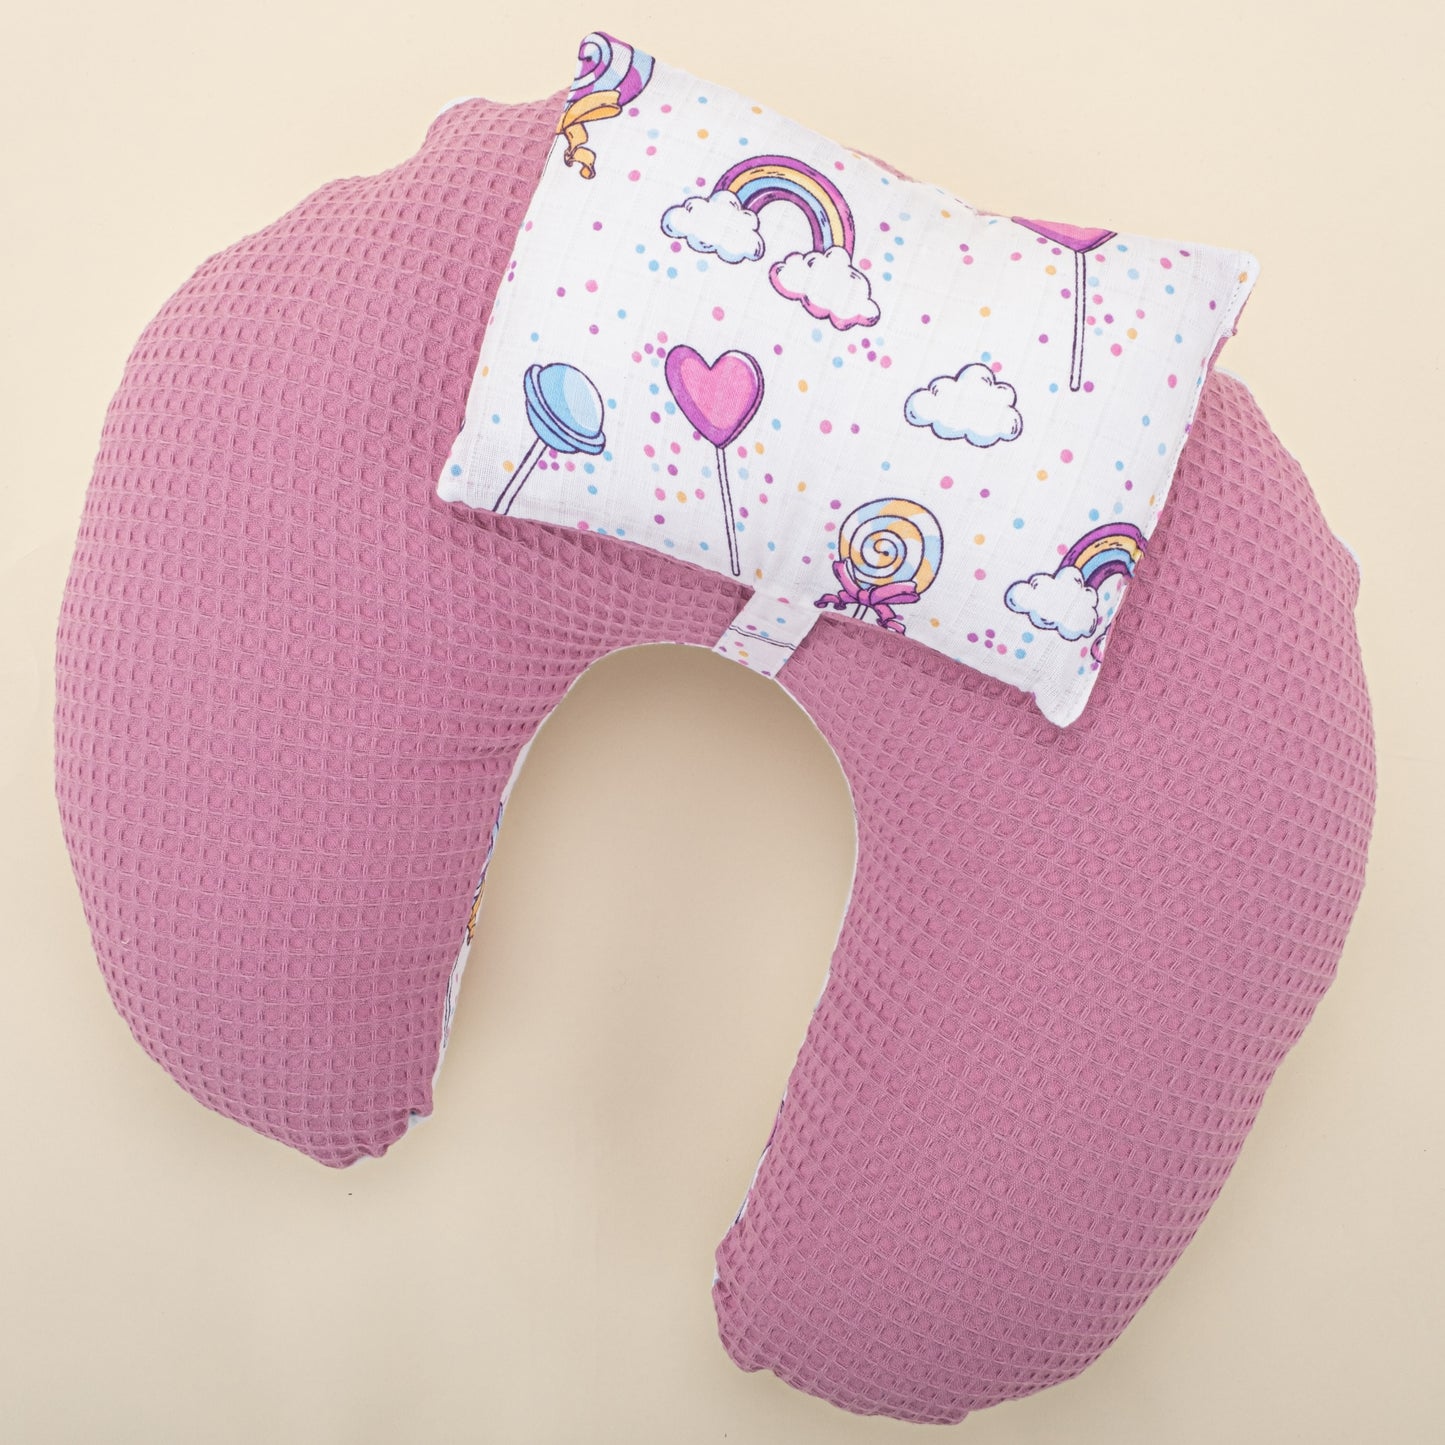 Breastfeeding Pillow - Plum Honeycomb - Lollipop